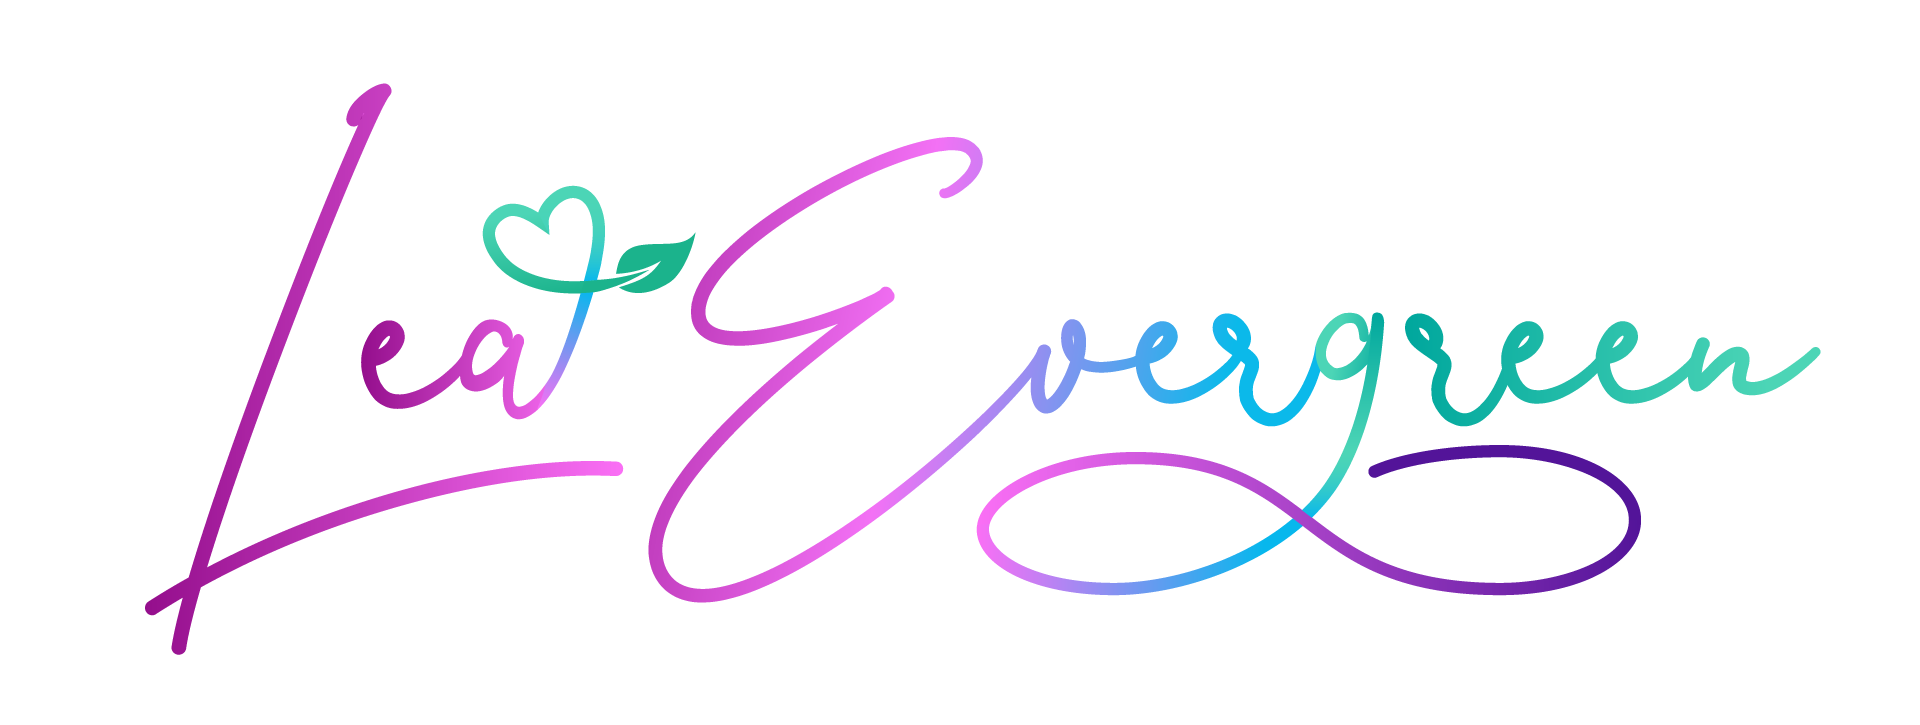 Lea Evergreen - Logo